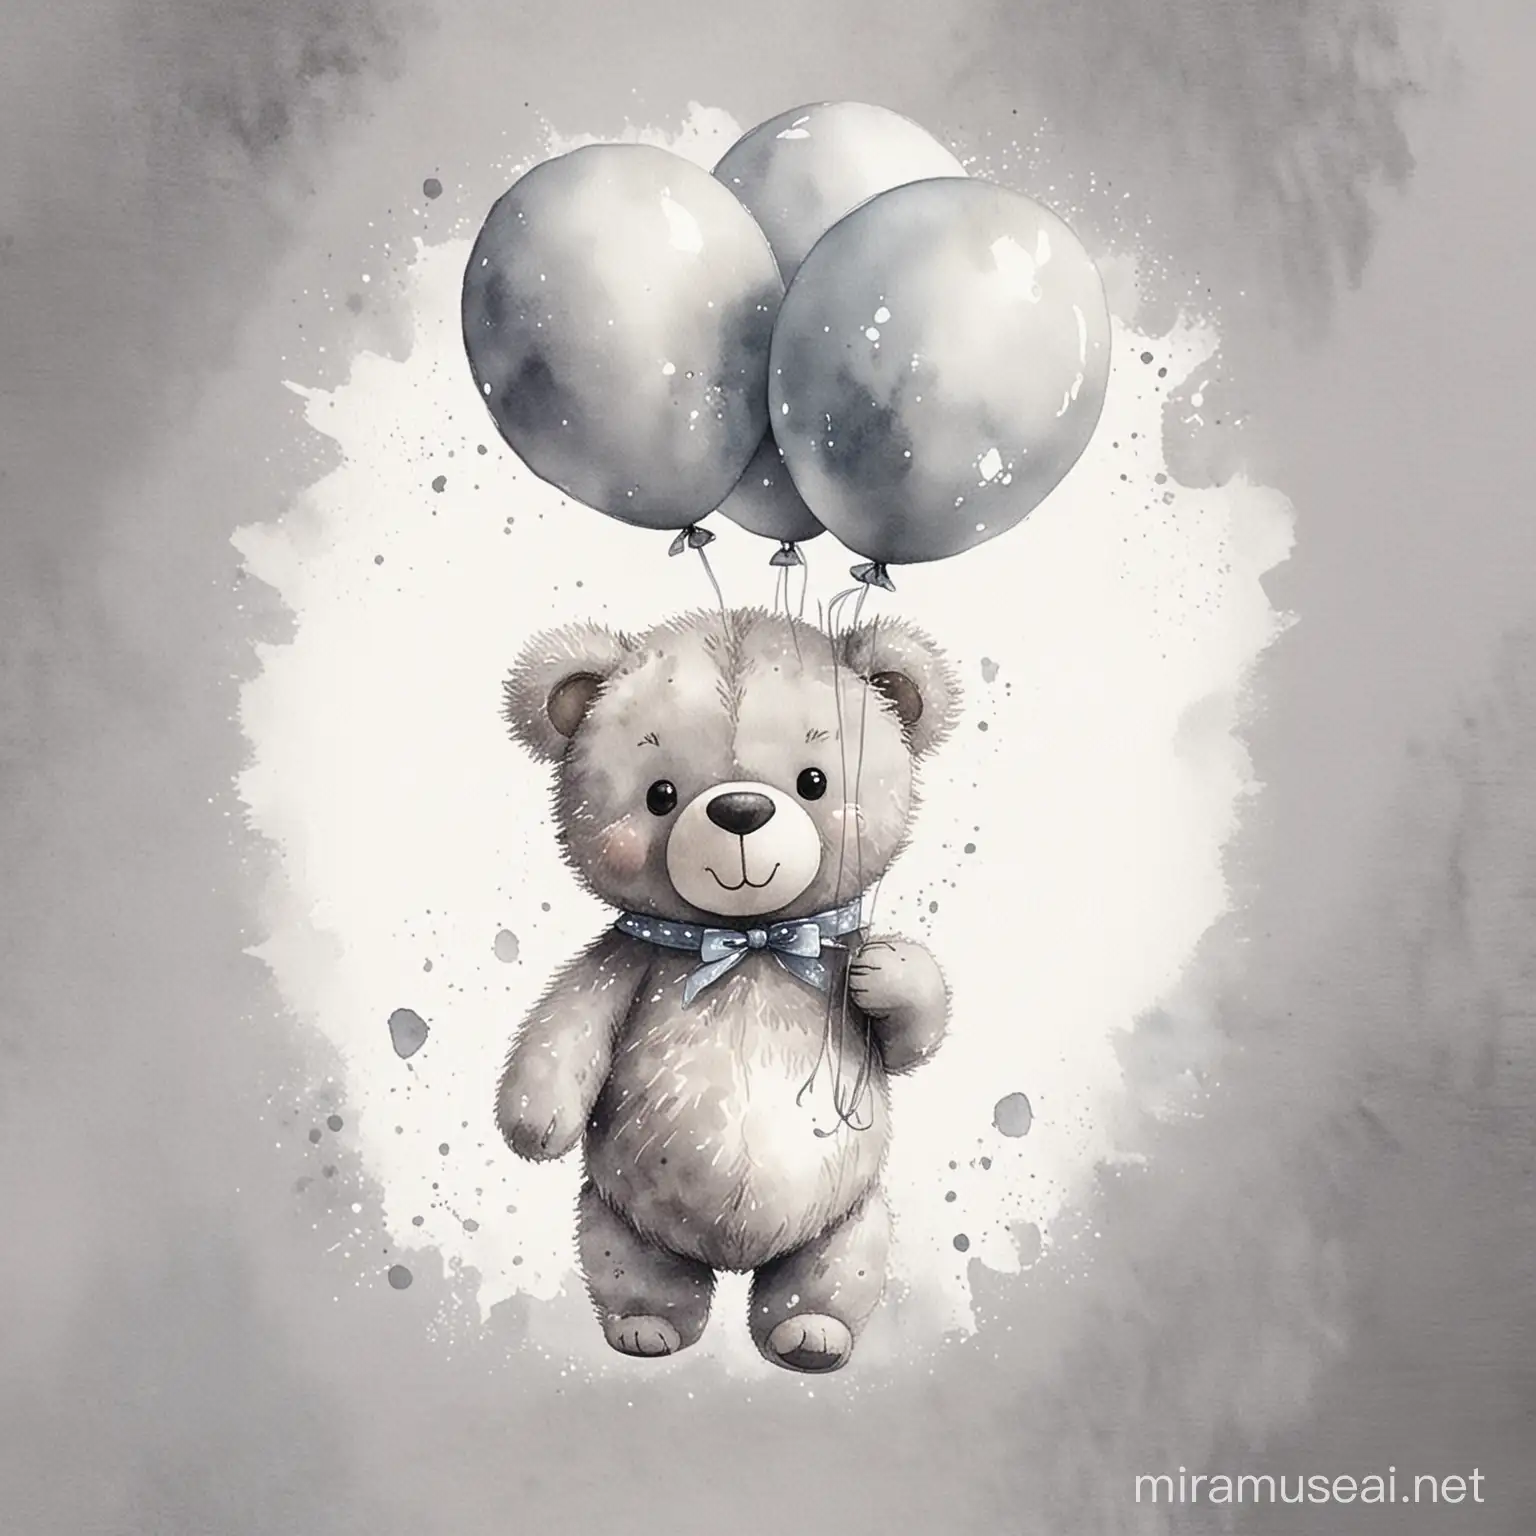 Watercolour cute grey teddy bear, carrying grey balloons
